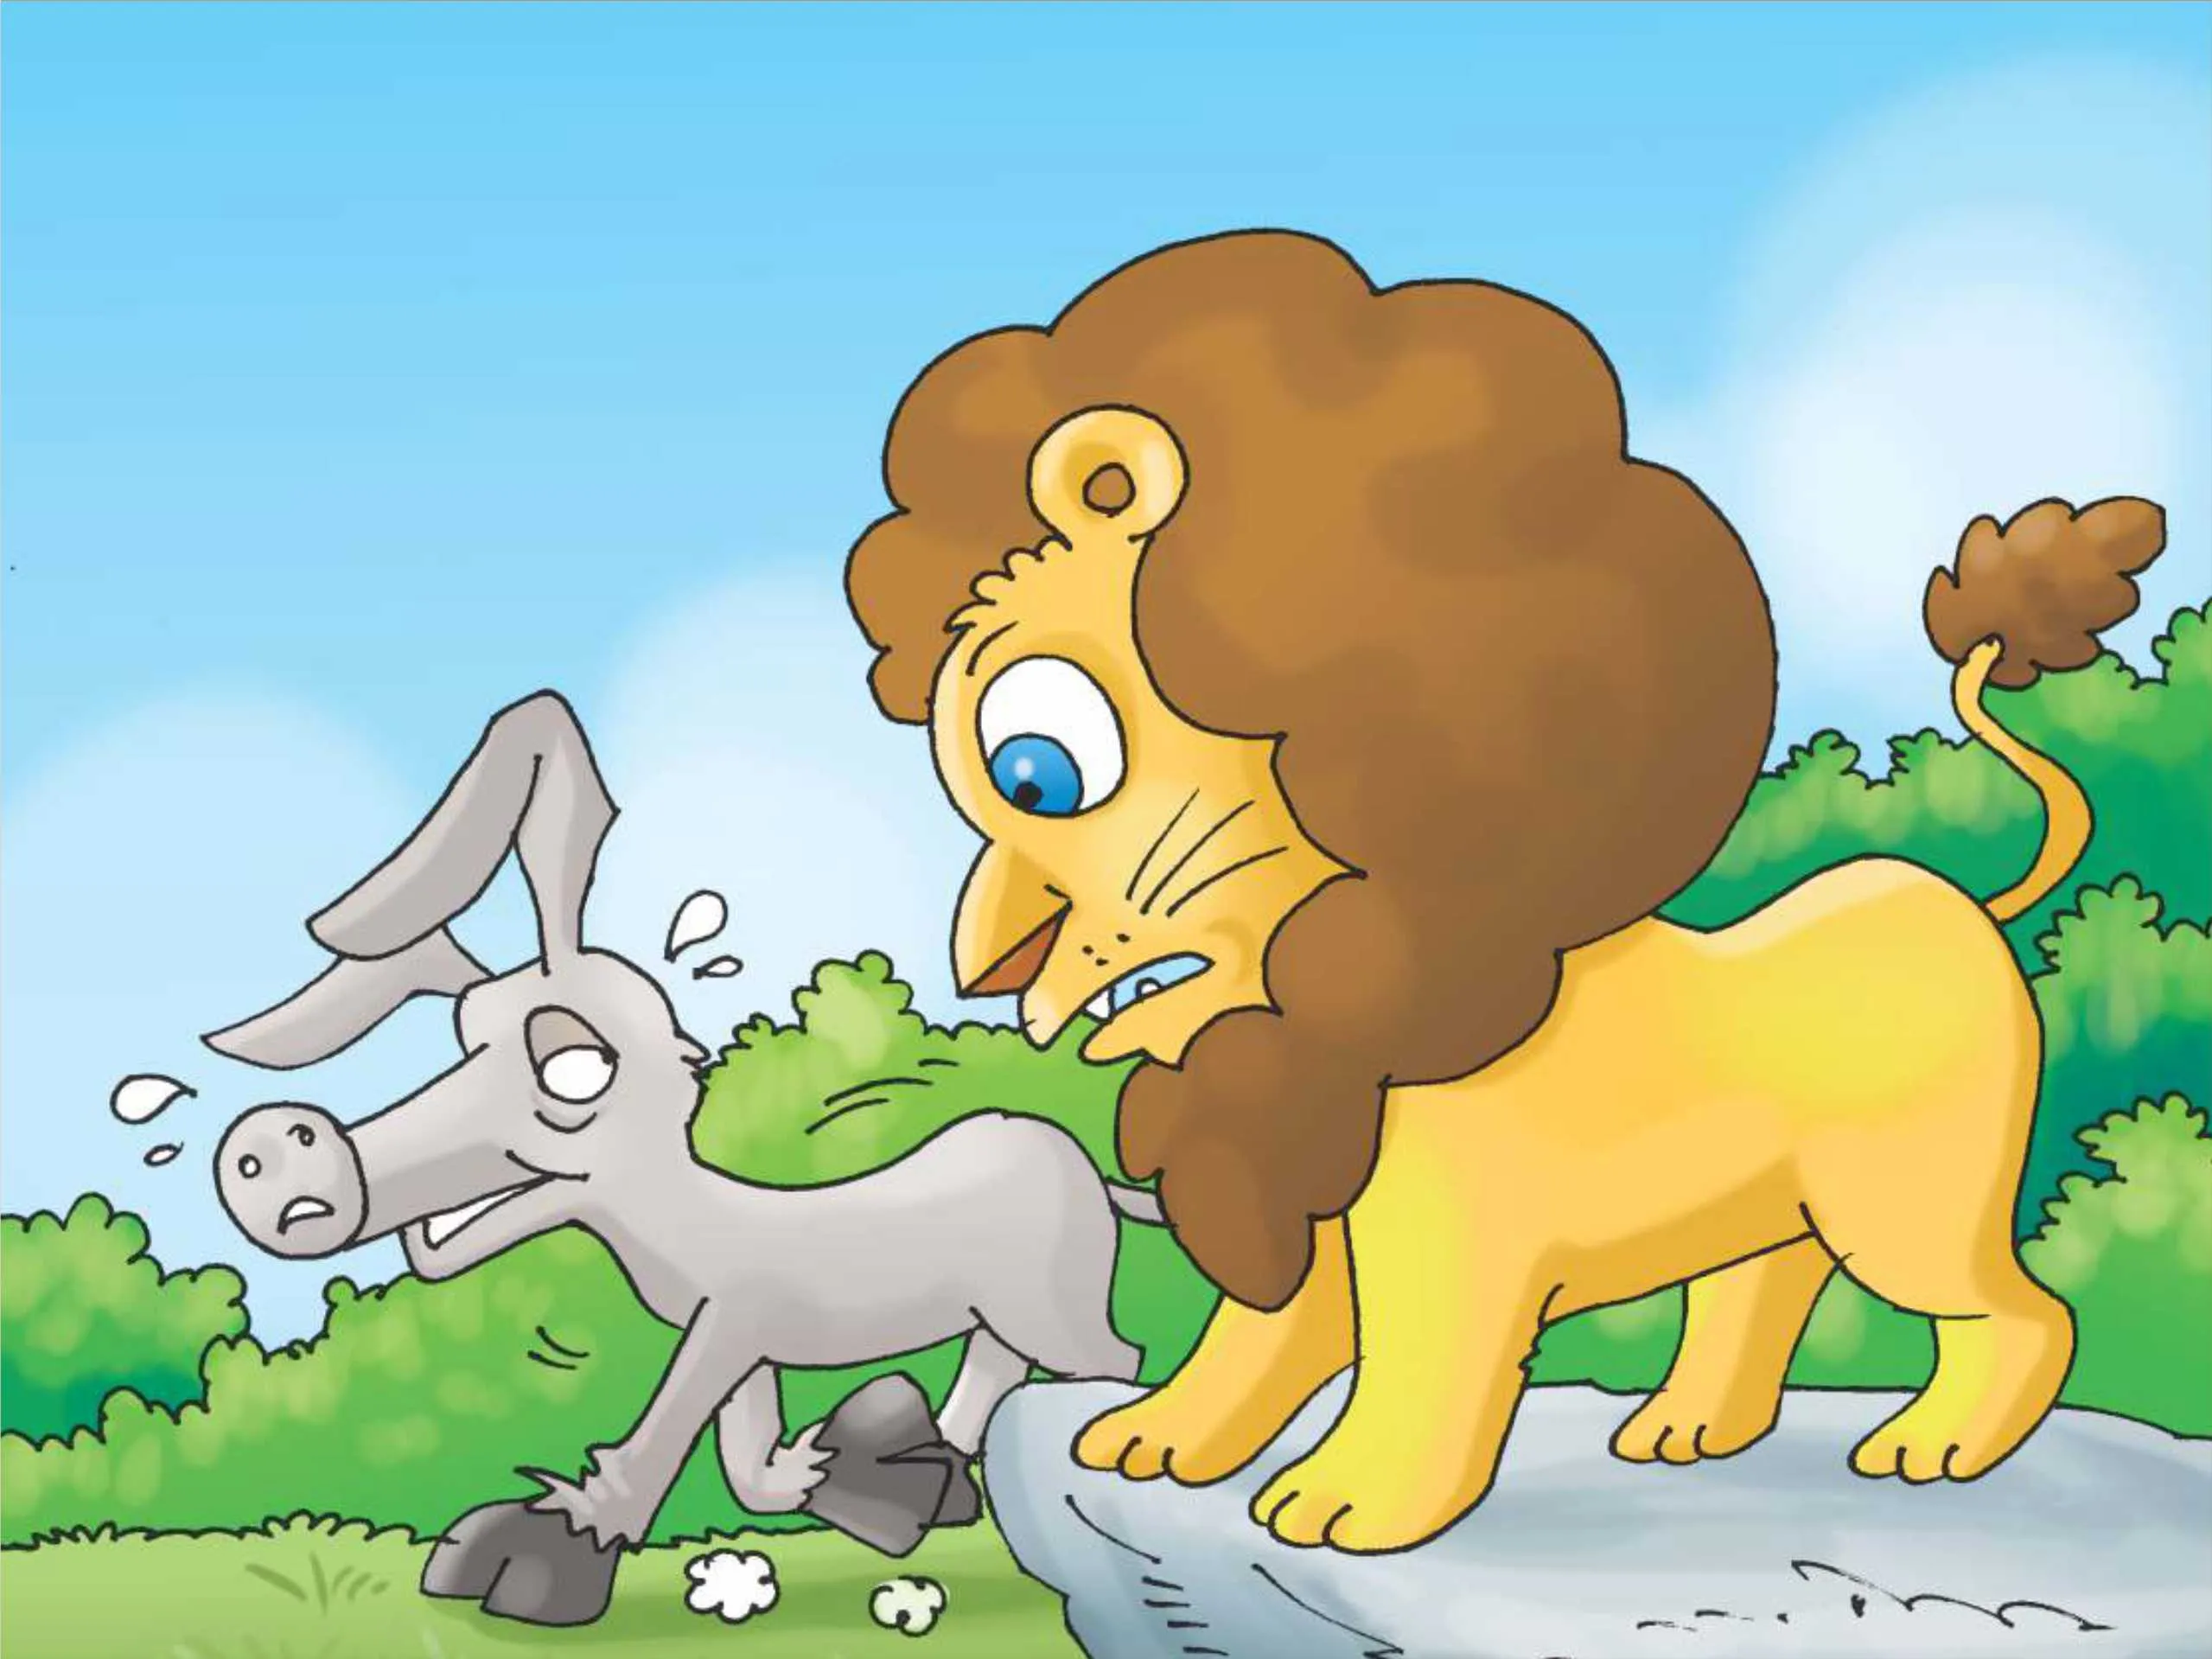 Lion with a donkey cartoon image